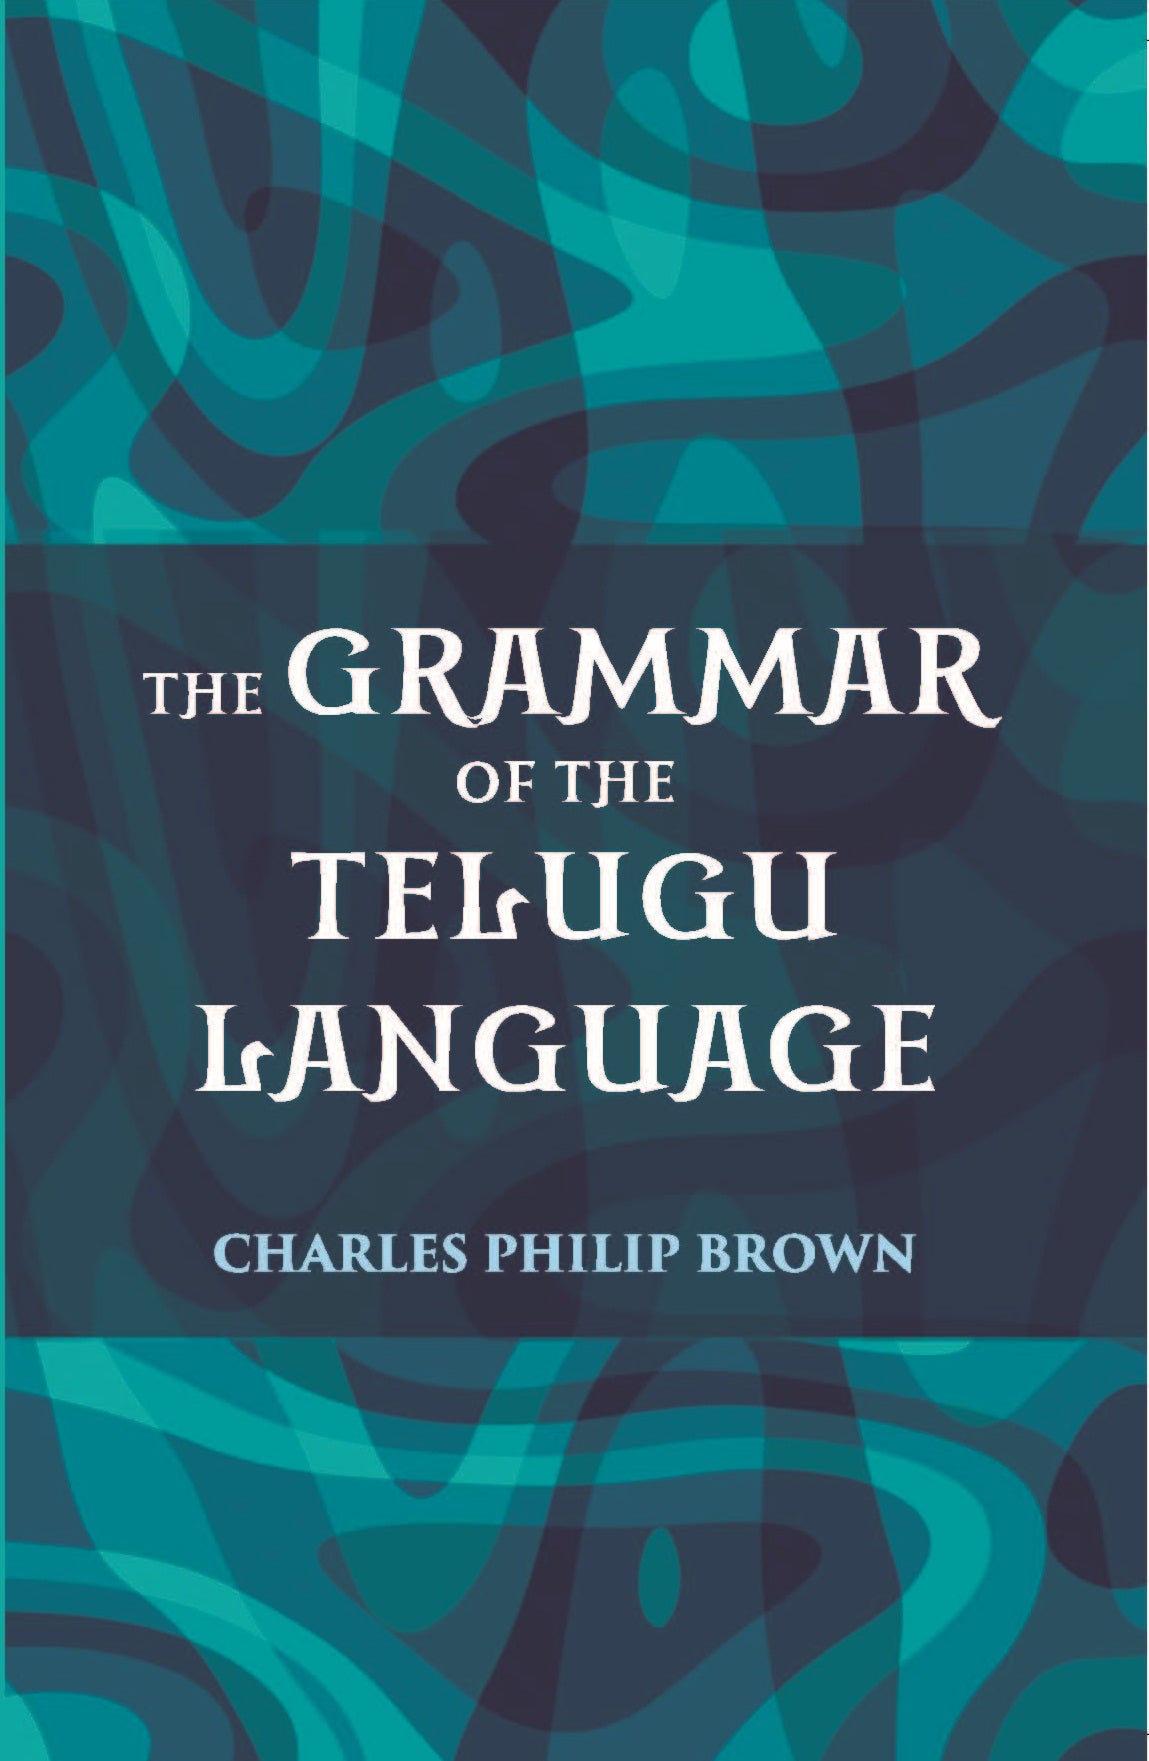 The Grammar Of The Telugu Language